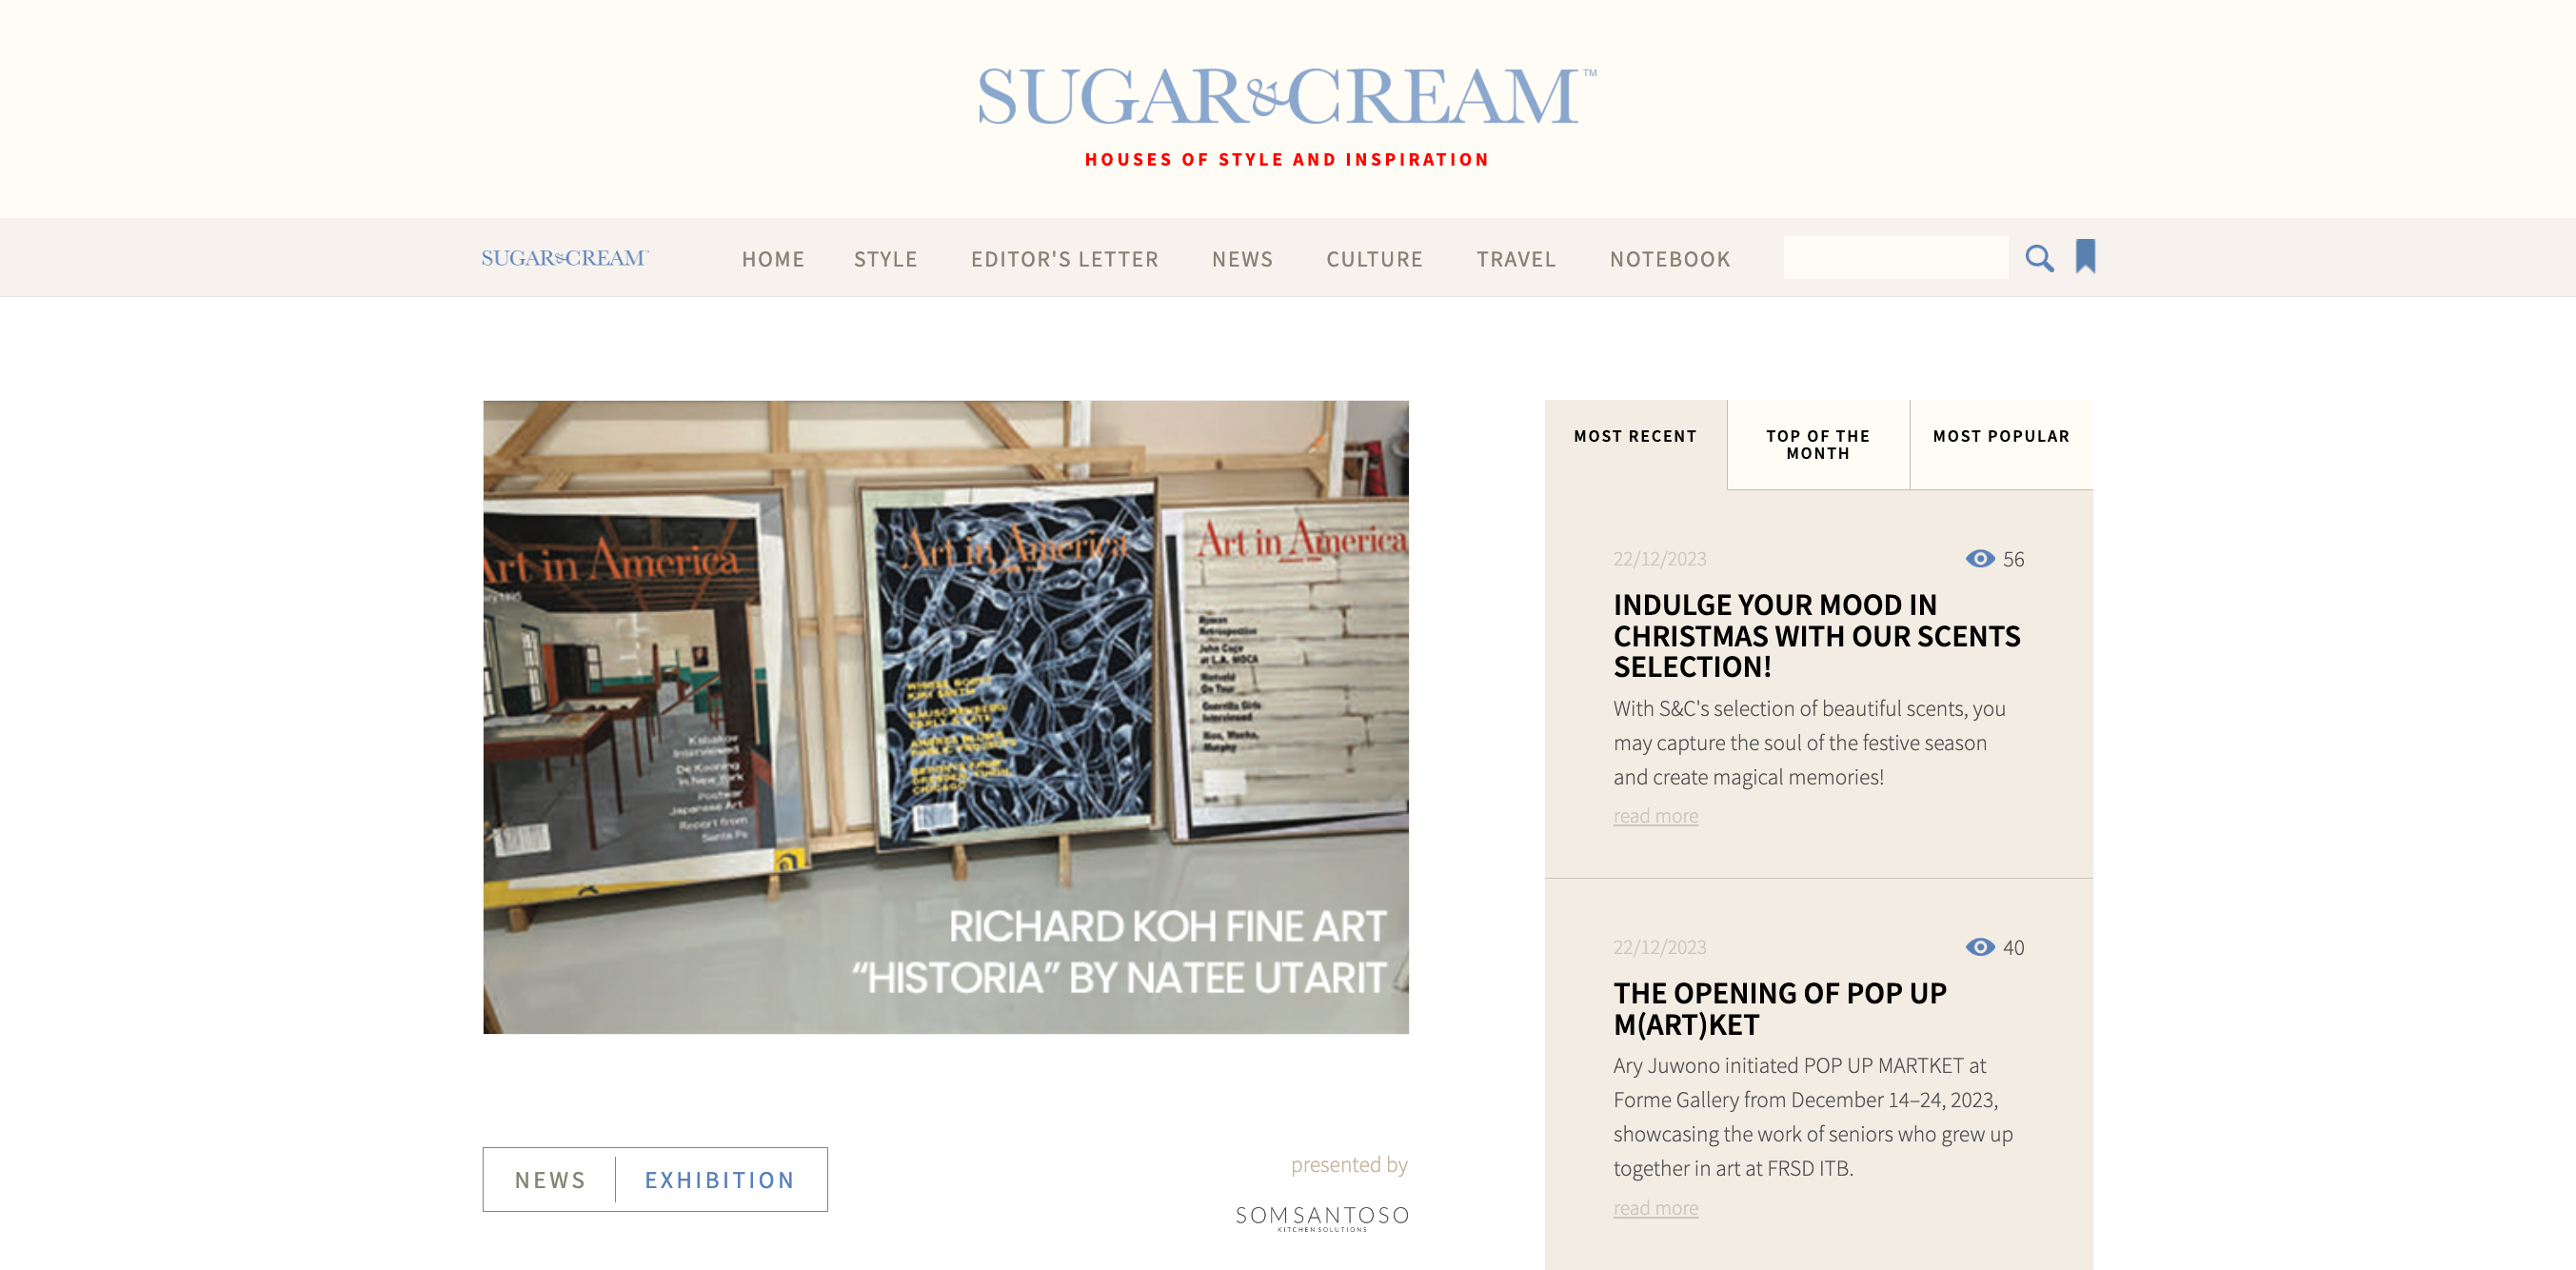 Sugar & Cream – RICHARD KOH FINE ART: “HISTORIA” BY NATEE UTARIT